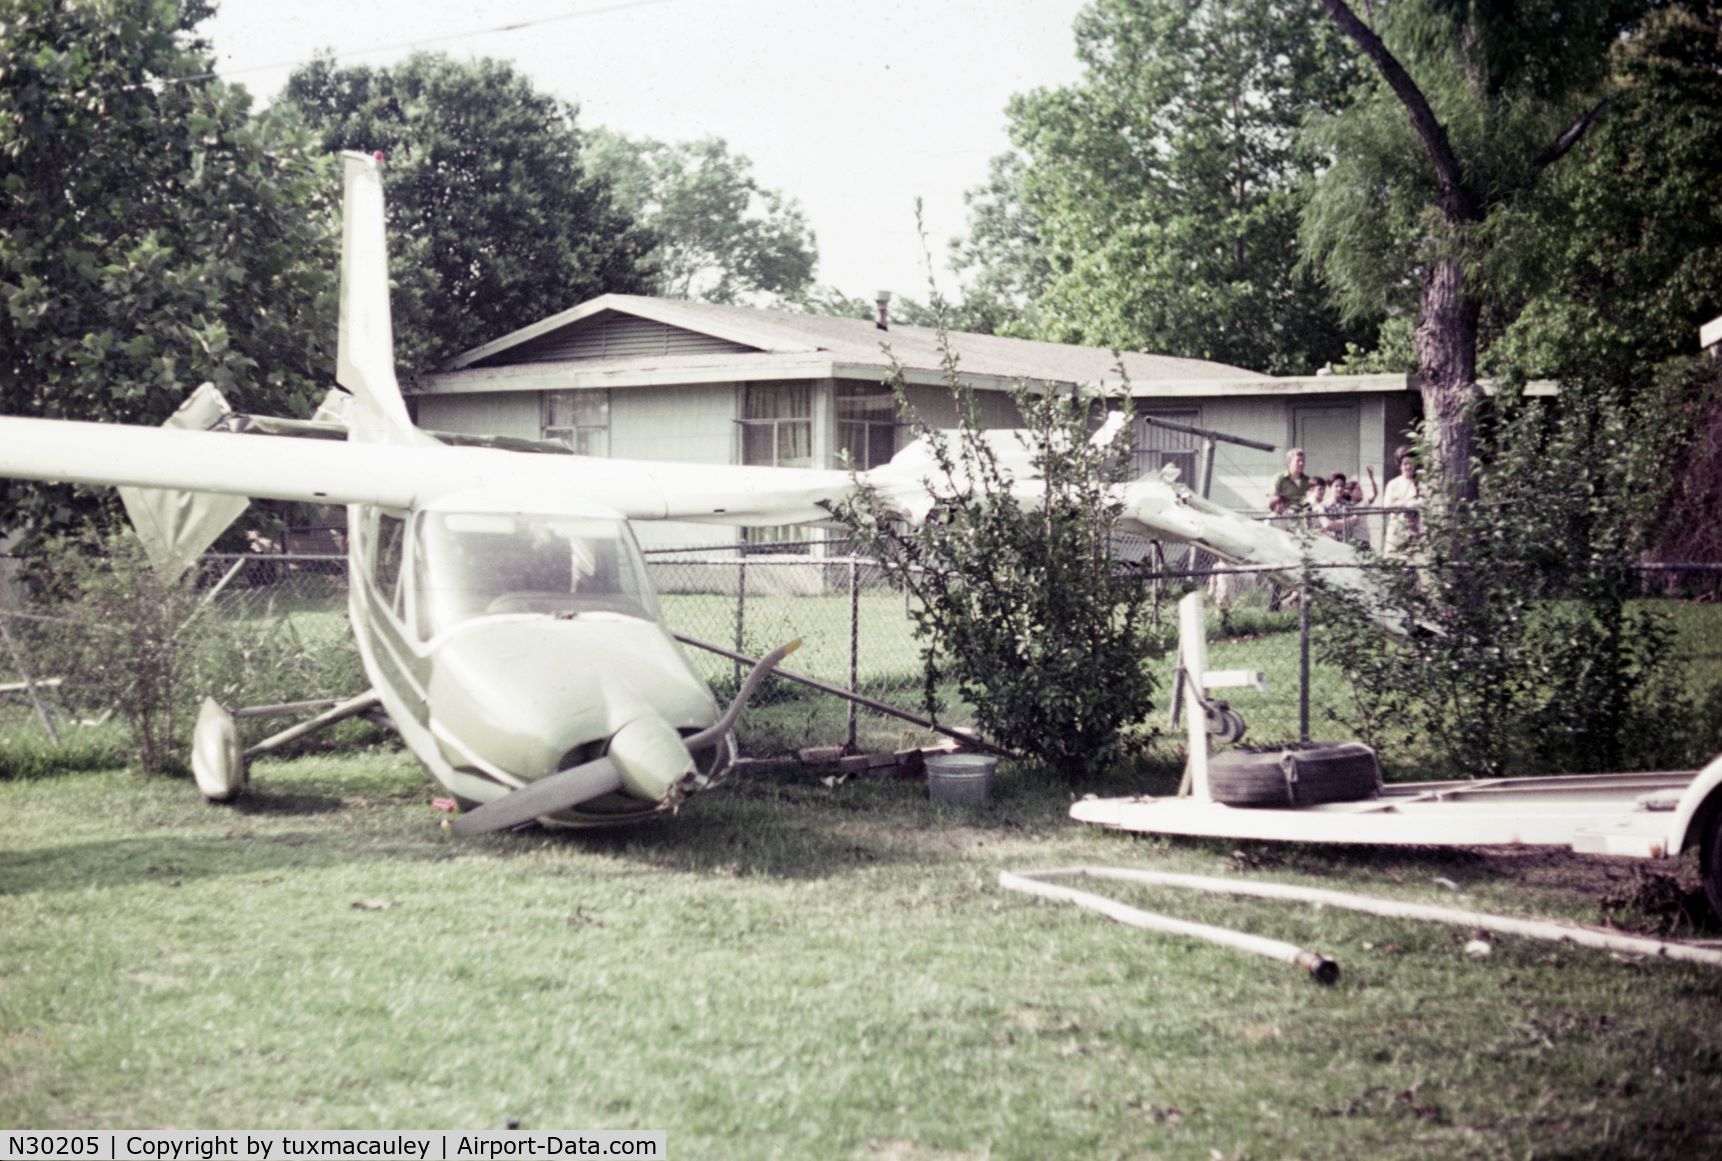 N30205, Aero L-29 Delfin C/N 094016, plane crashed in my backyard in 1970's